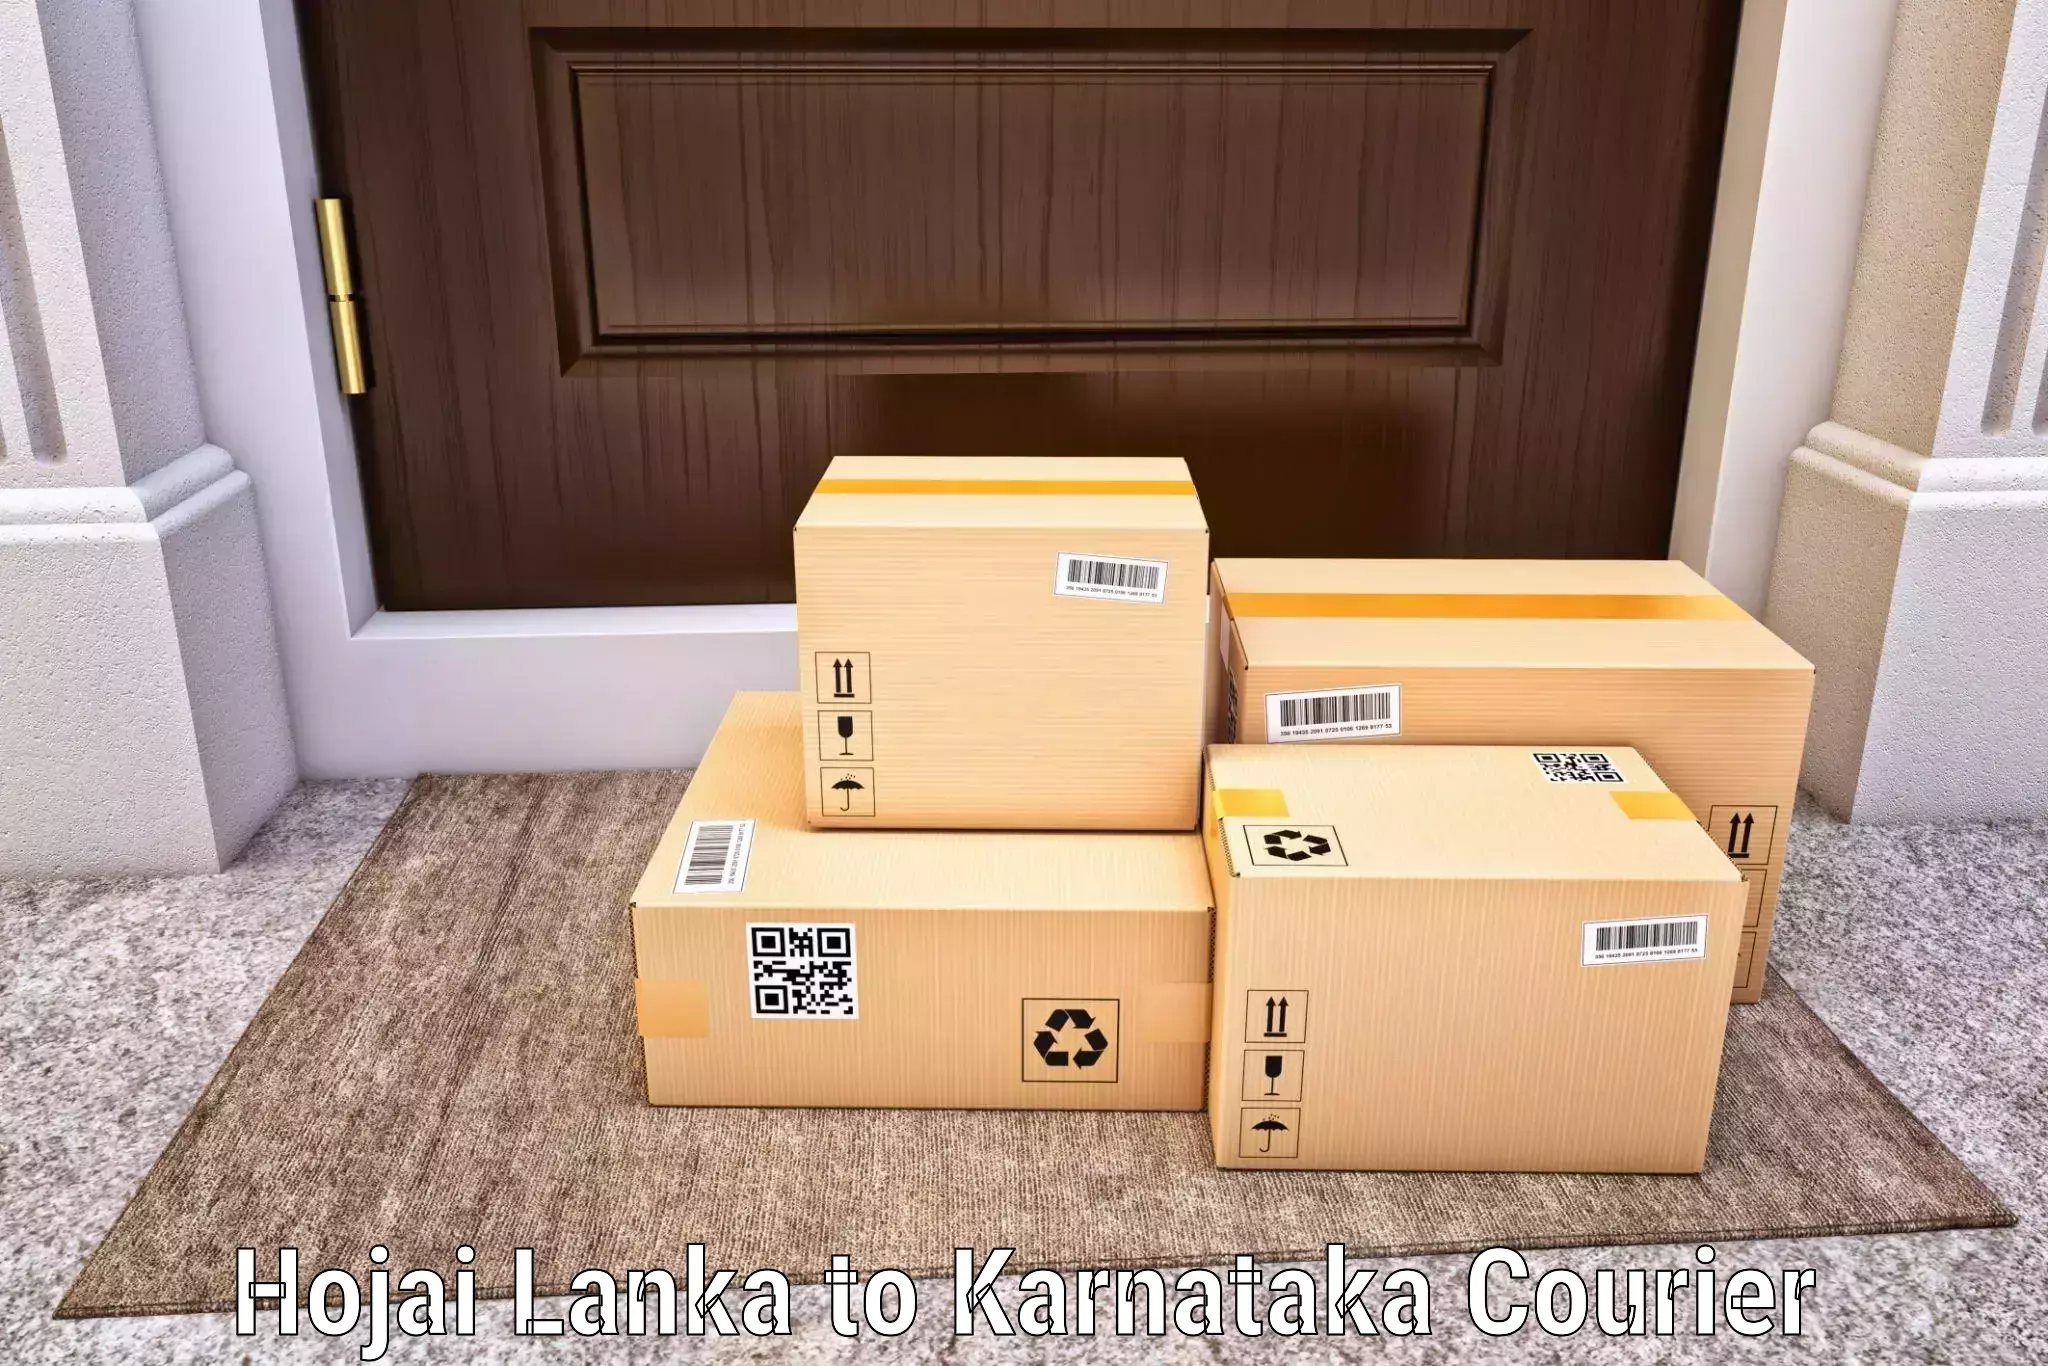 Logistics and distribution Hojai Lanka to Karwar